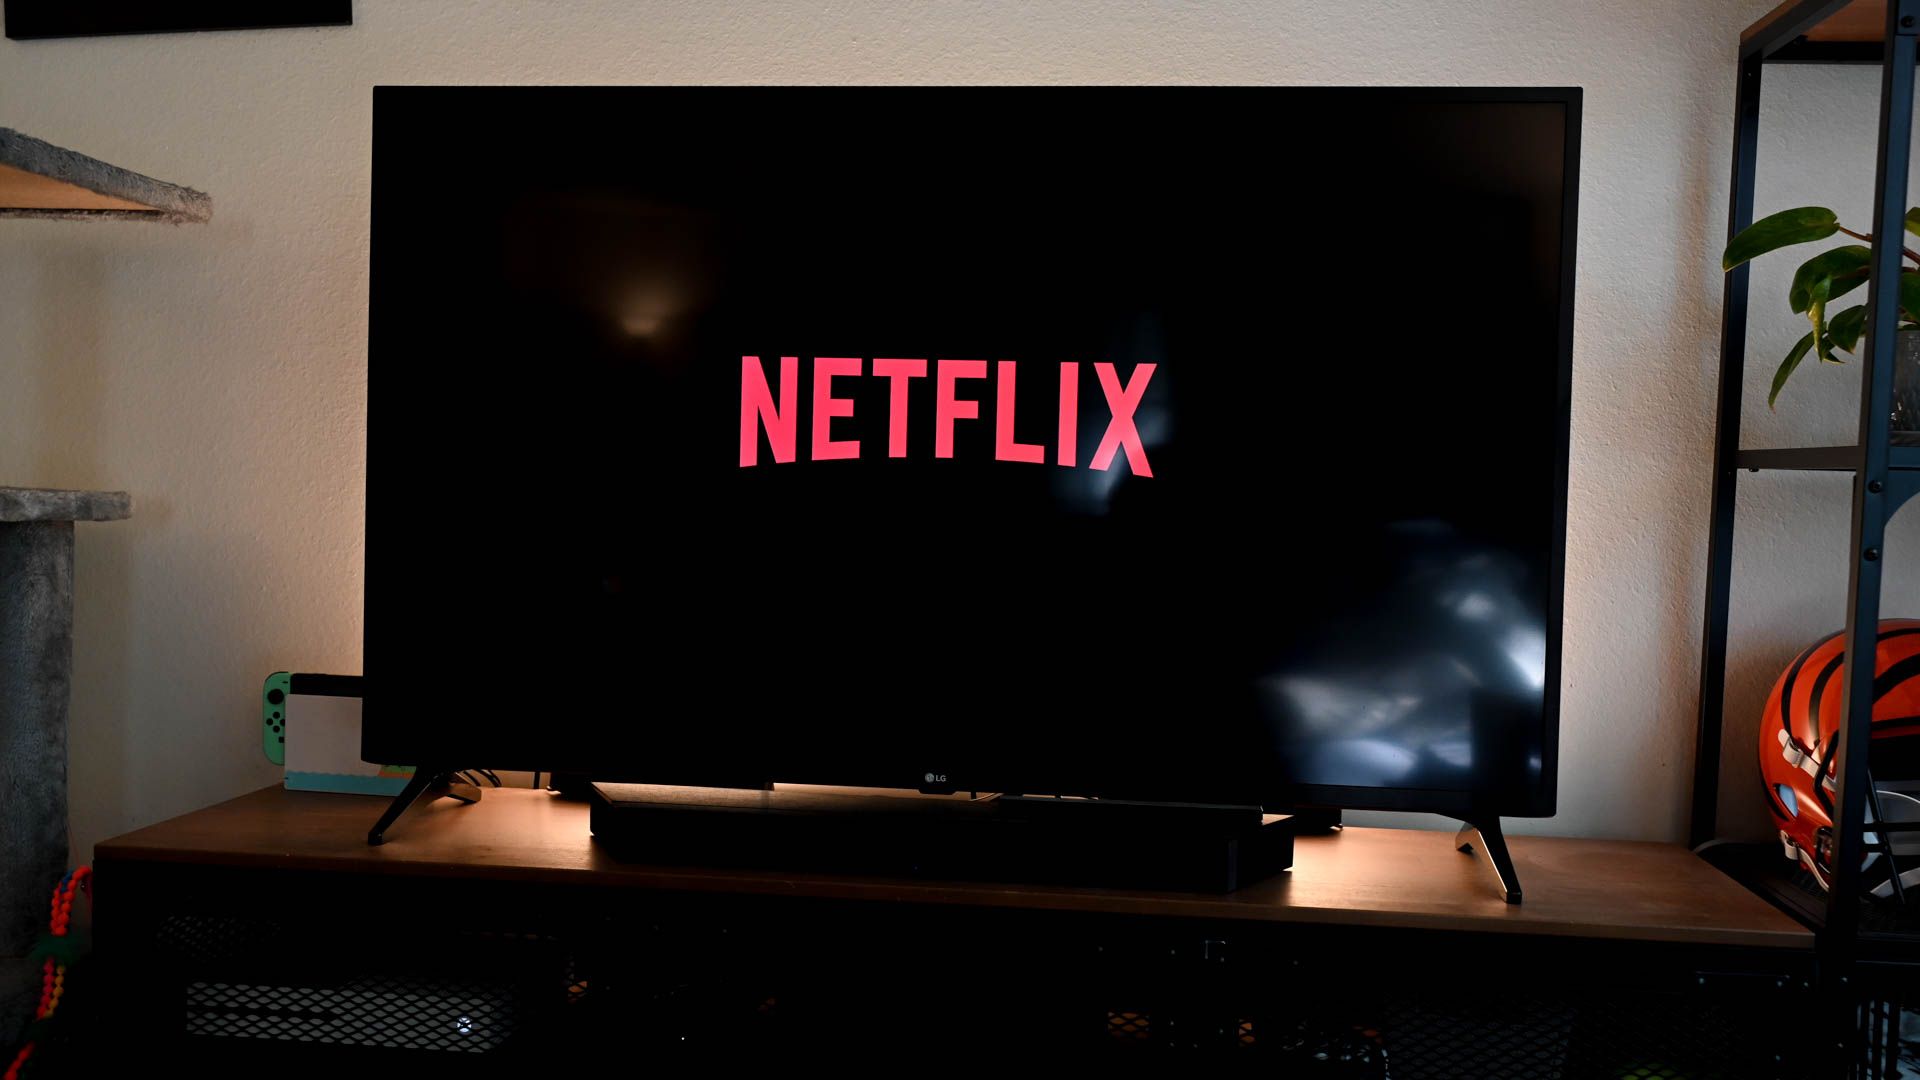 Netflix loading screen on a TV